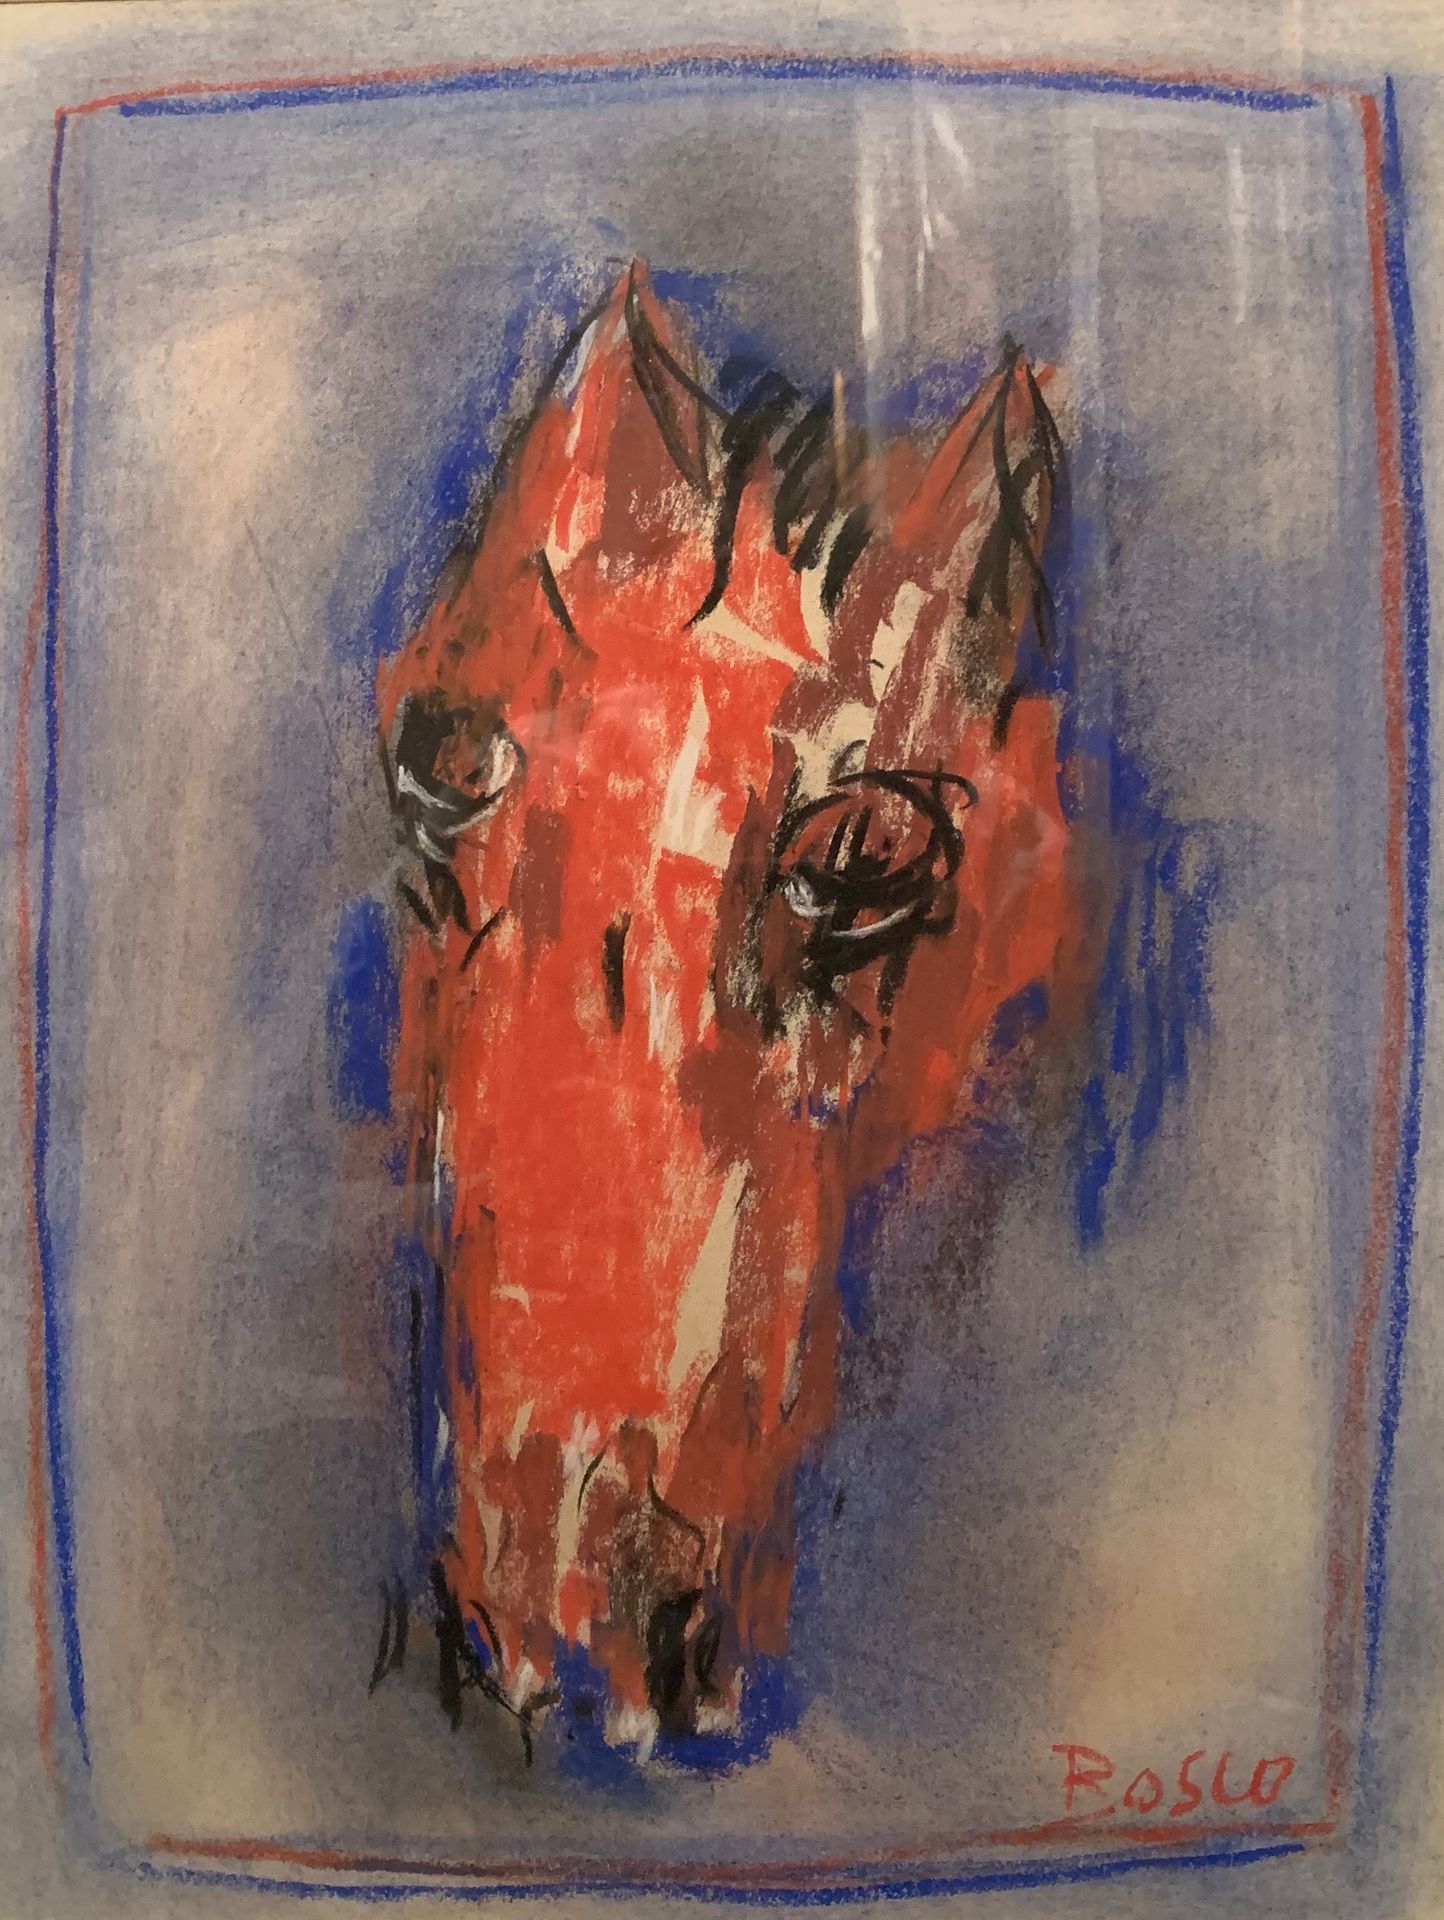 Null 皮埃尔-博斯克 (1909-1993)

一匹马的头

右下角有签名的粉彩画

42 x 23 厘米